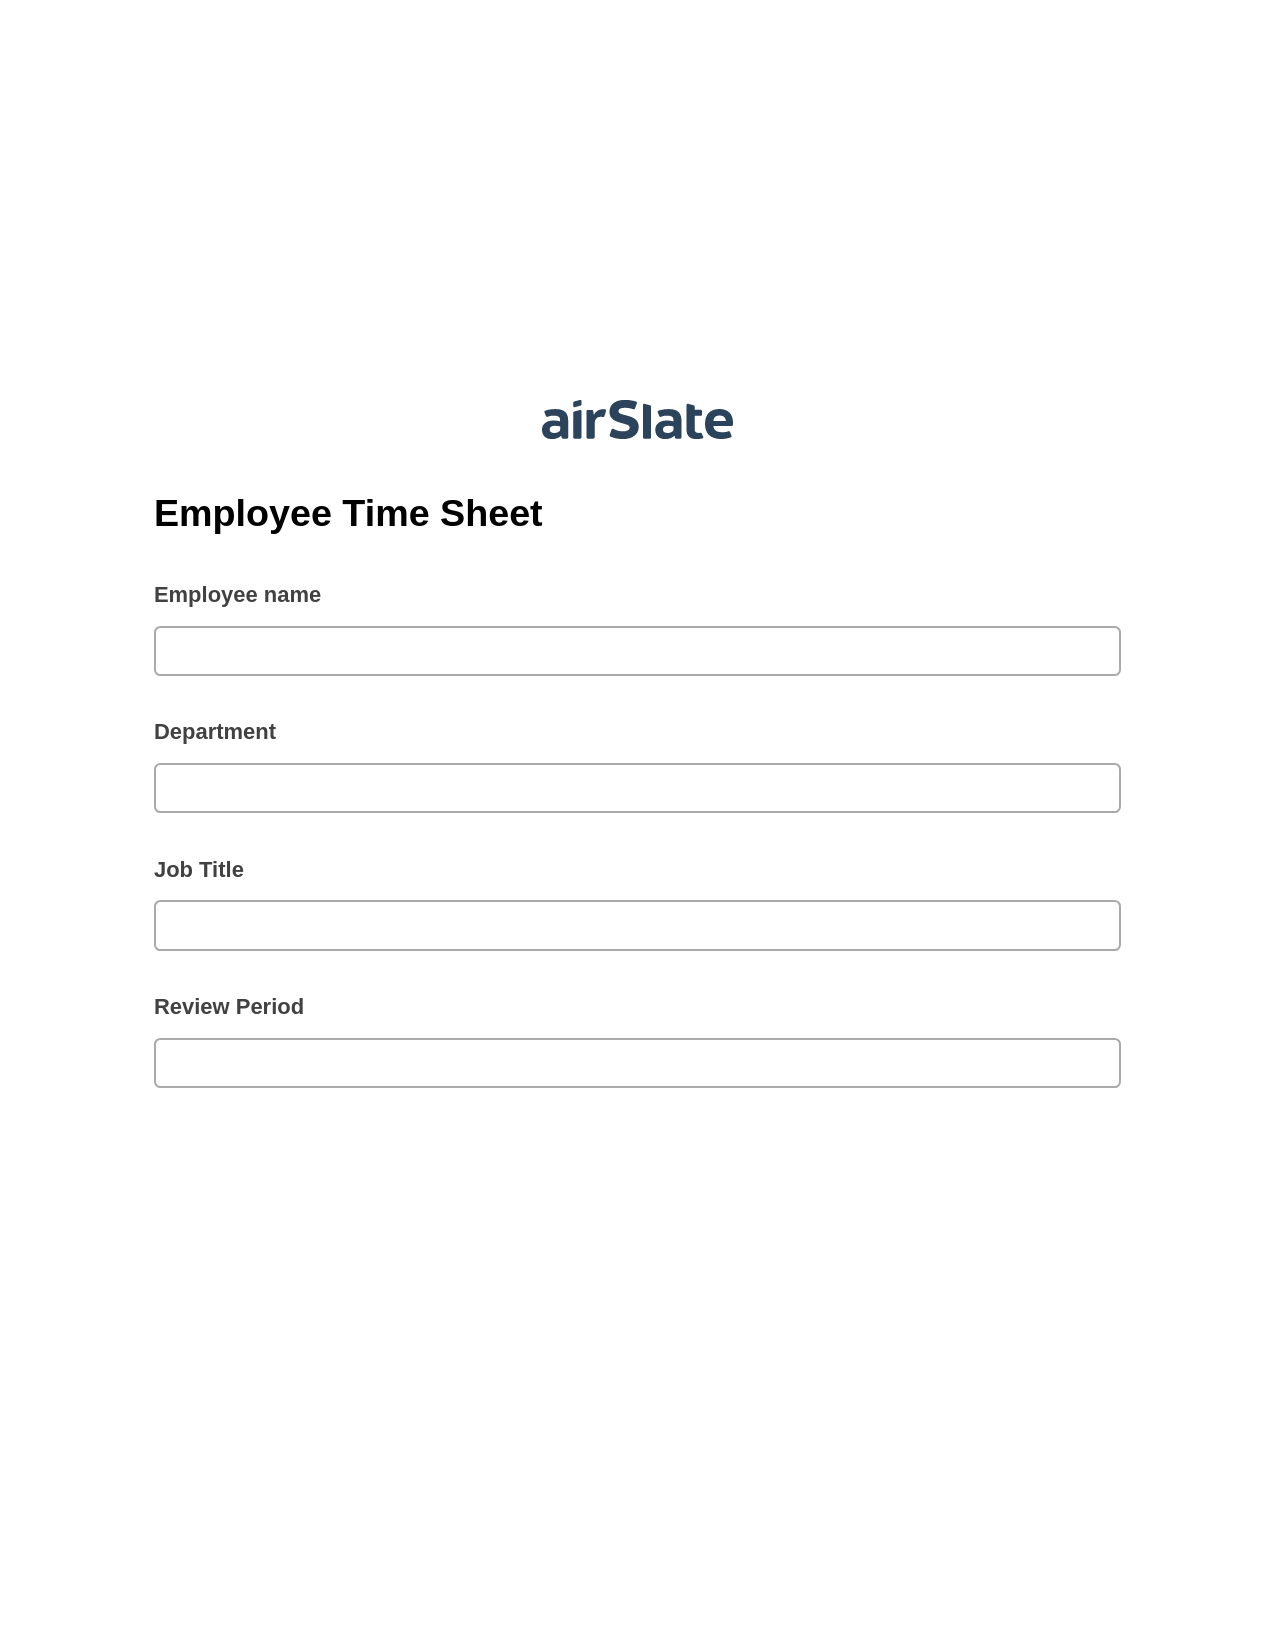 Multirole Employee Time Sheet Pre-fill from CSV File Bot, Create Salesforce Records Bot, Webhook Postfinish Bot